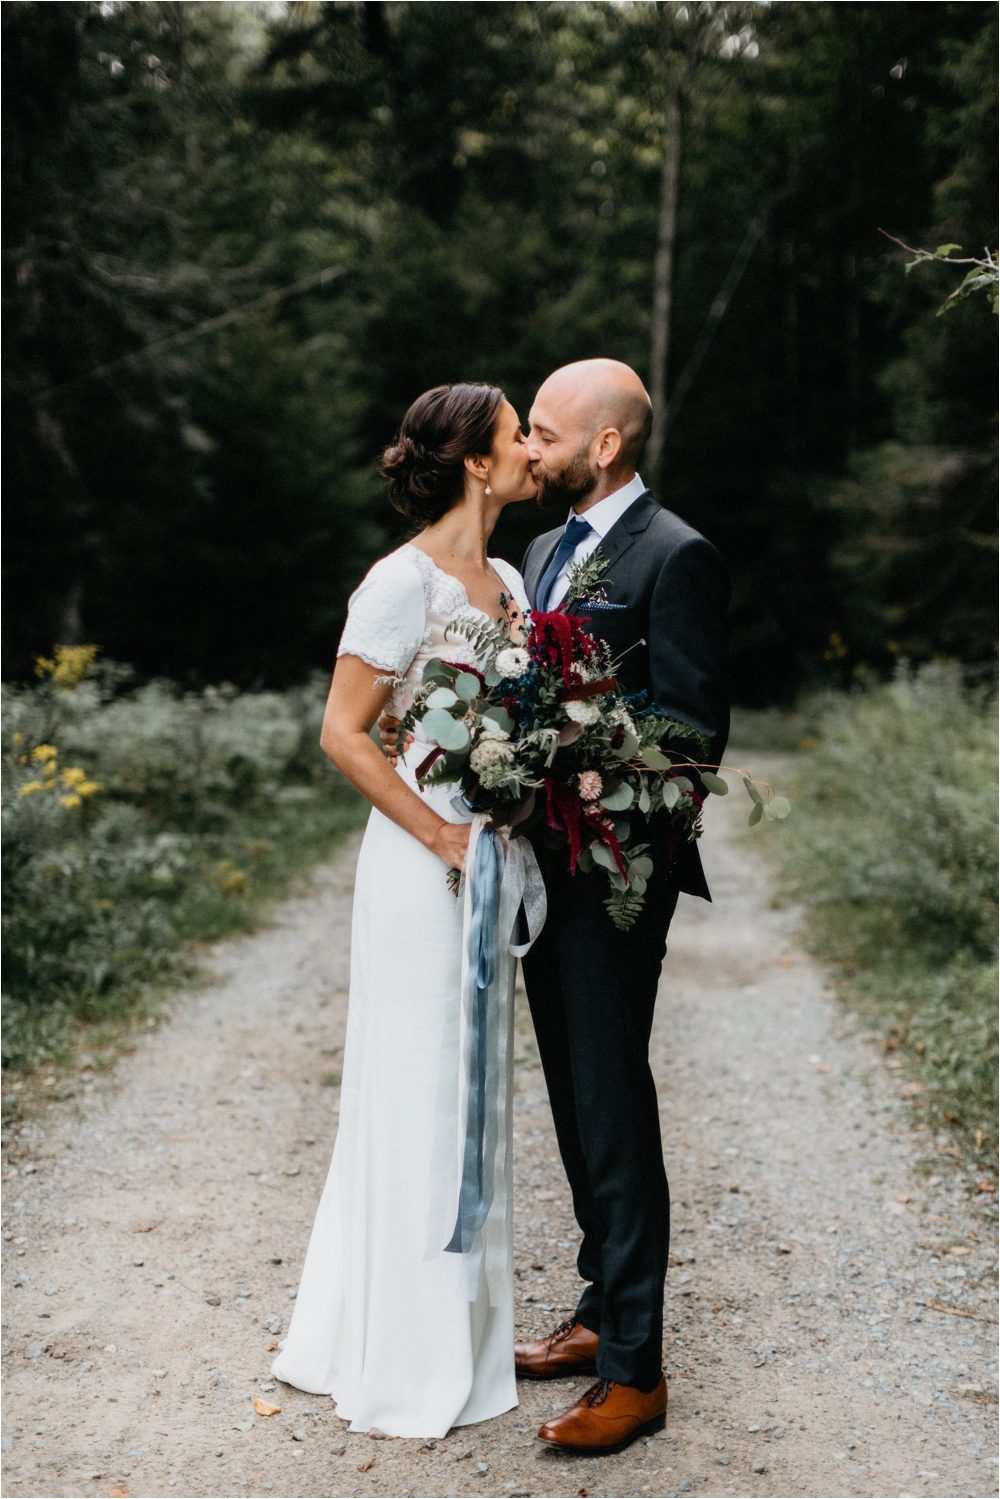 Ally & Ryan Adirondack Wedding on Big Moose Lake | Rime Arodaky gown | Shaw Photo Co.